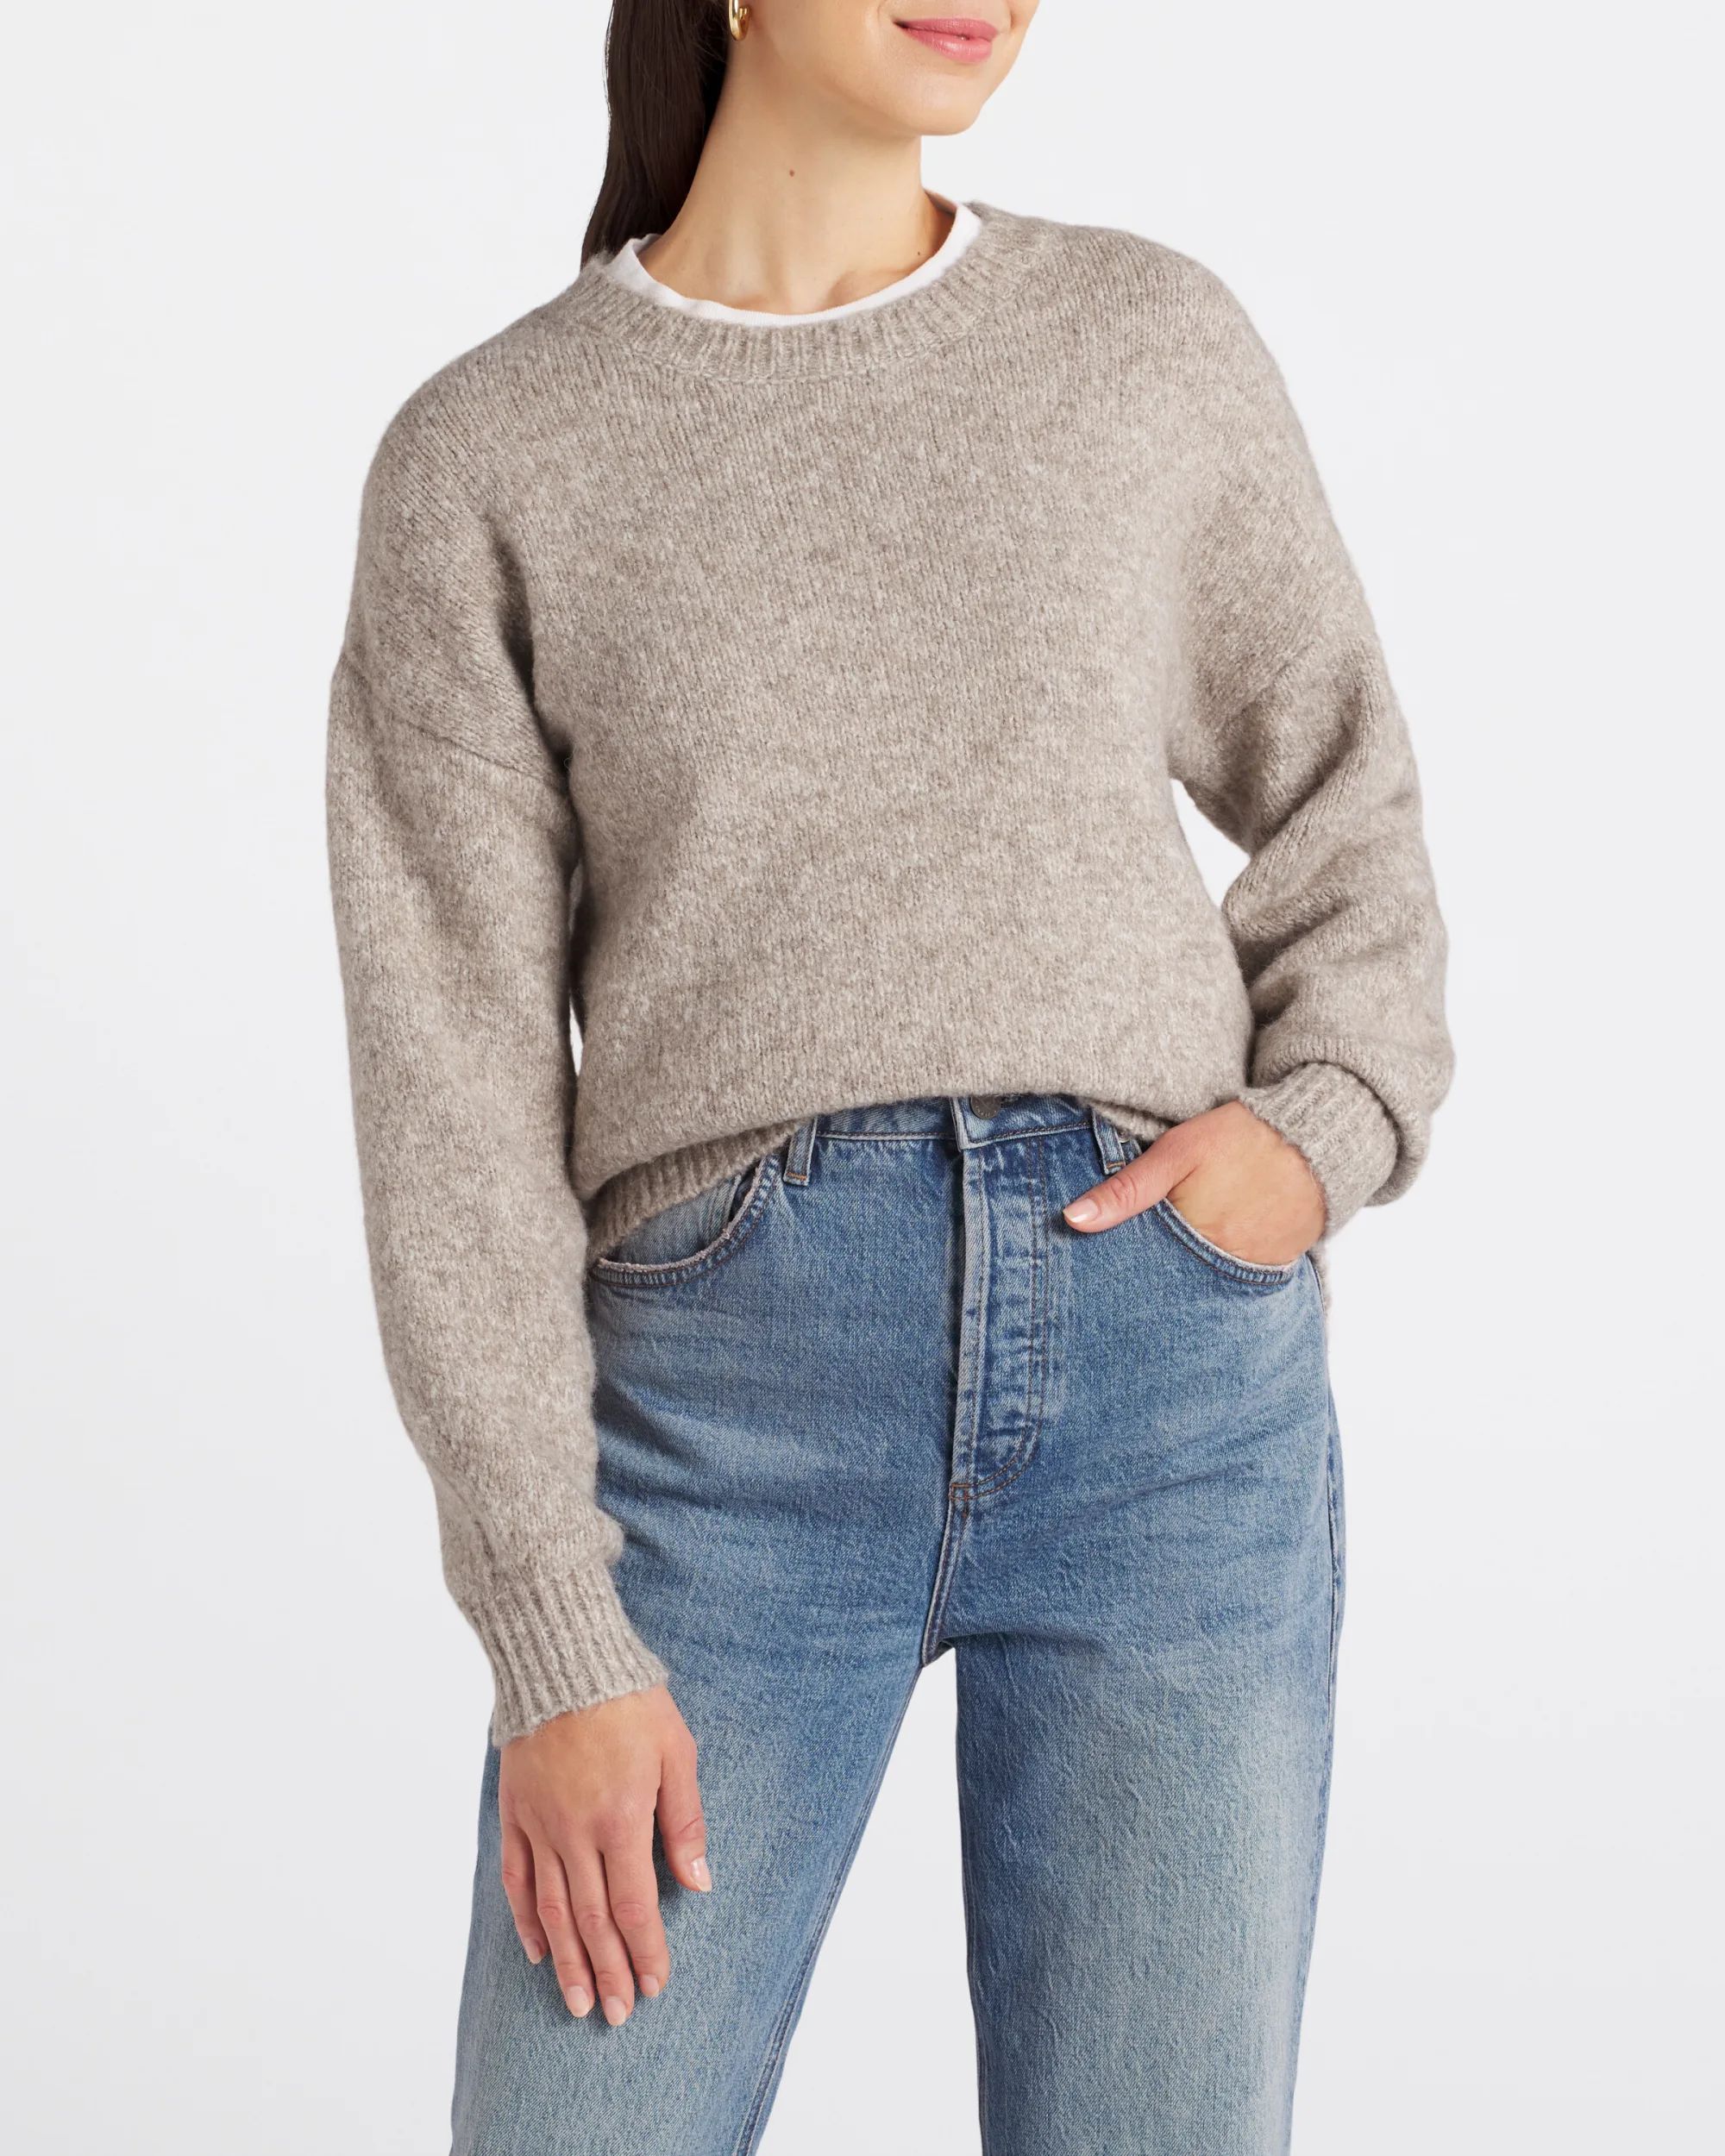 Etienne Long Sleeve Sweater | Stitch Fix